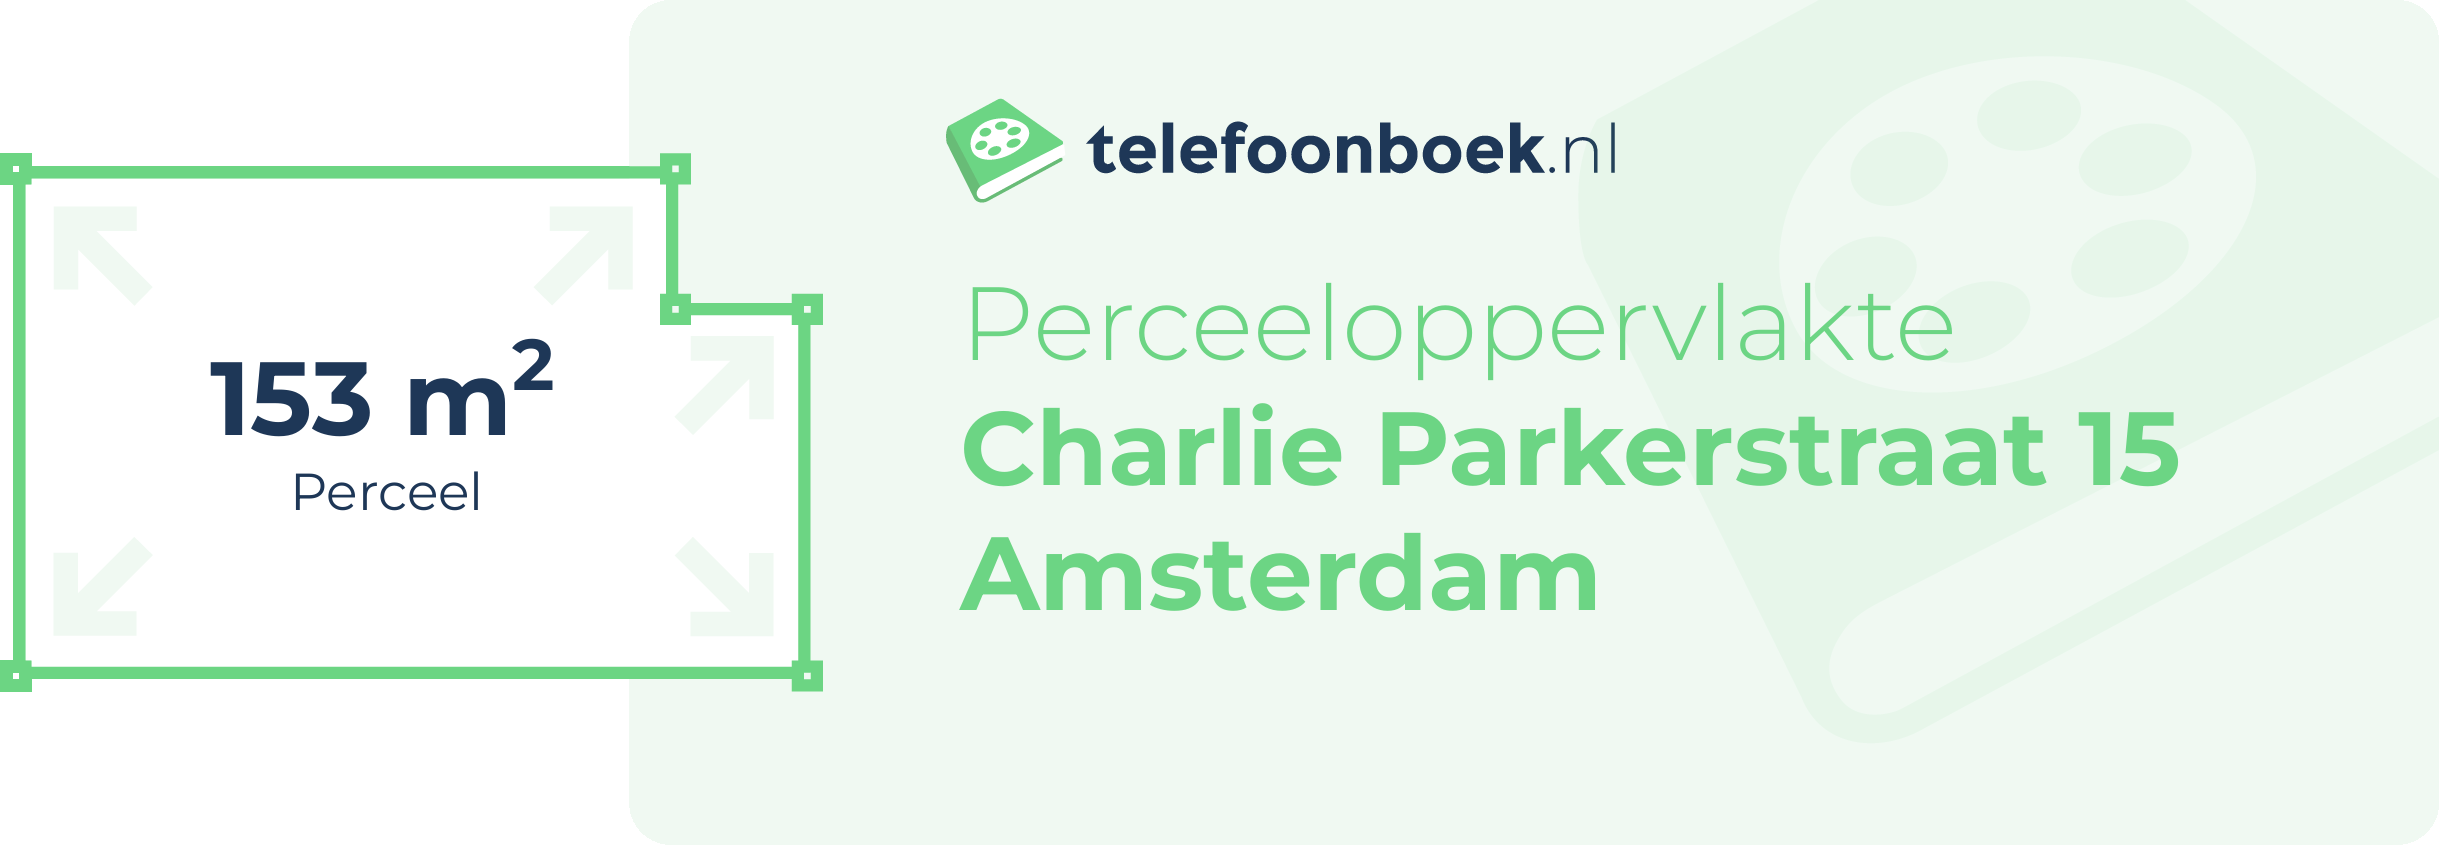 Perceeloppervlakte Charlie Parkerstraat 15 Amsterdam